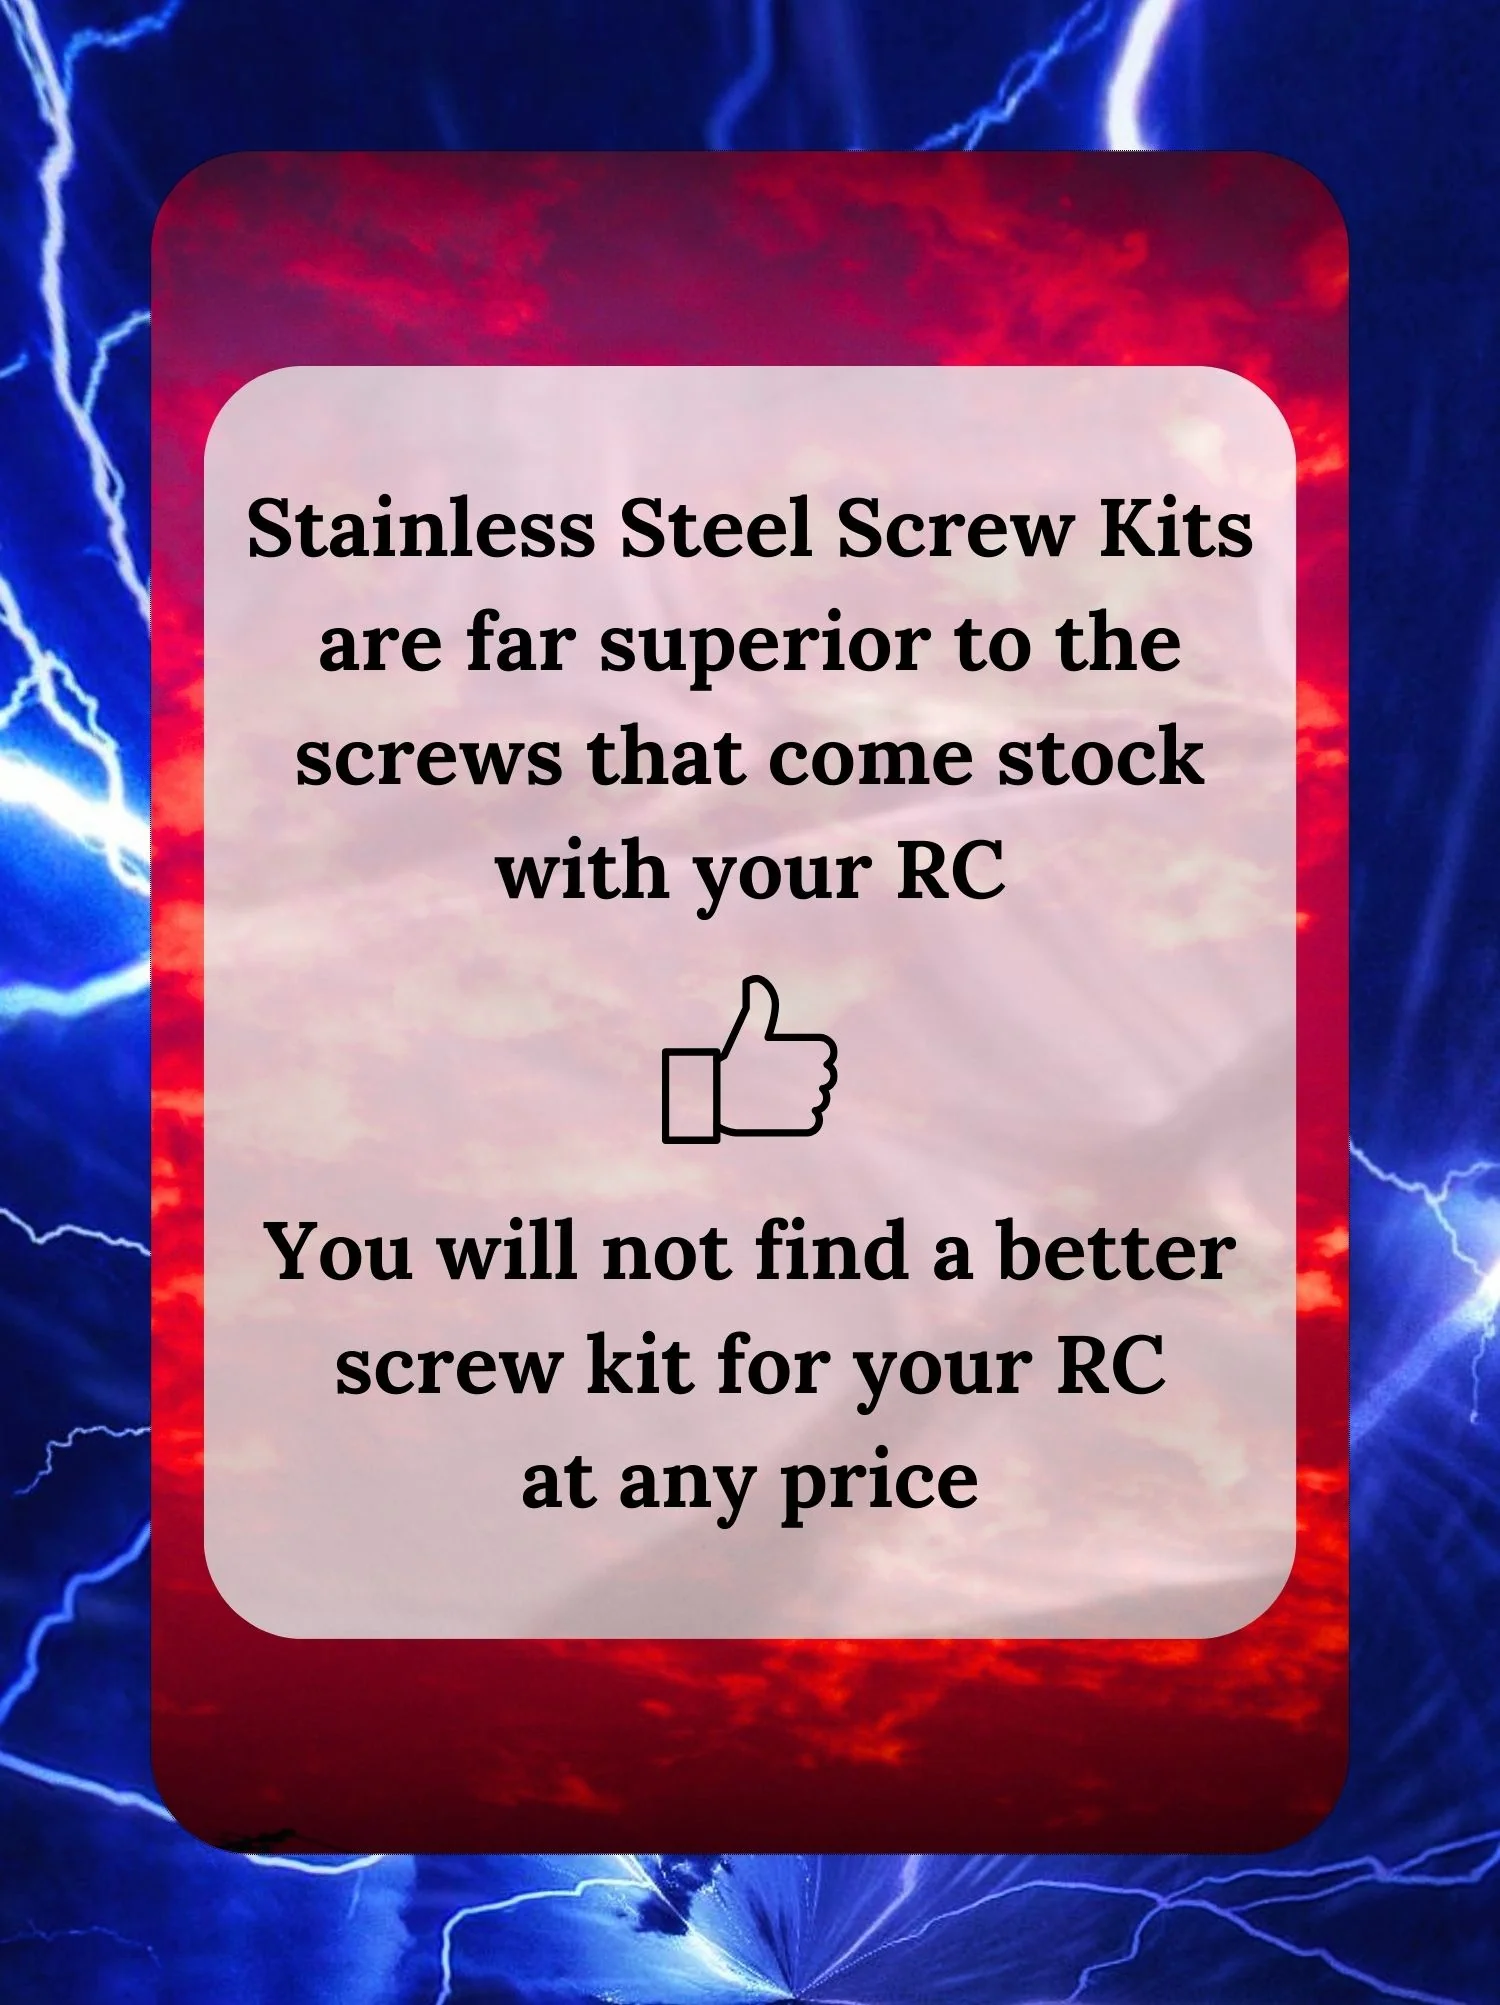 RCScrewZ Stainless Steel Screw Kit durg019 for Team Durango DESC10 - Picture 6 of 12